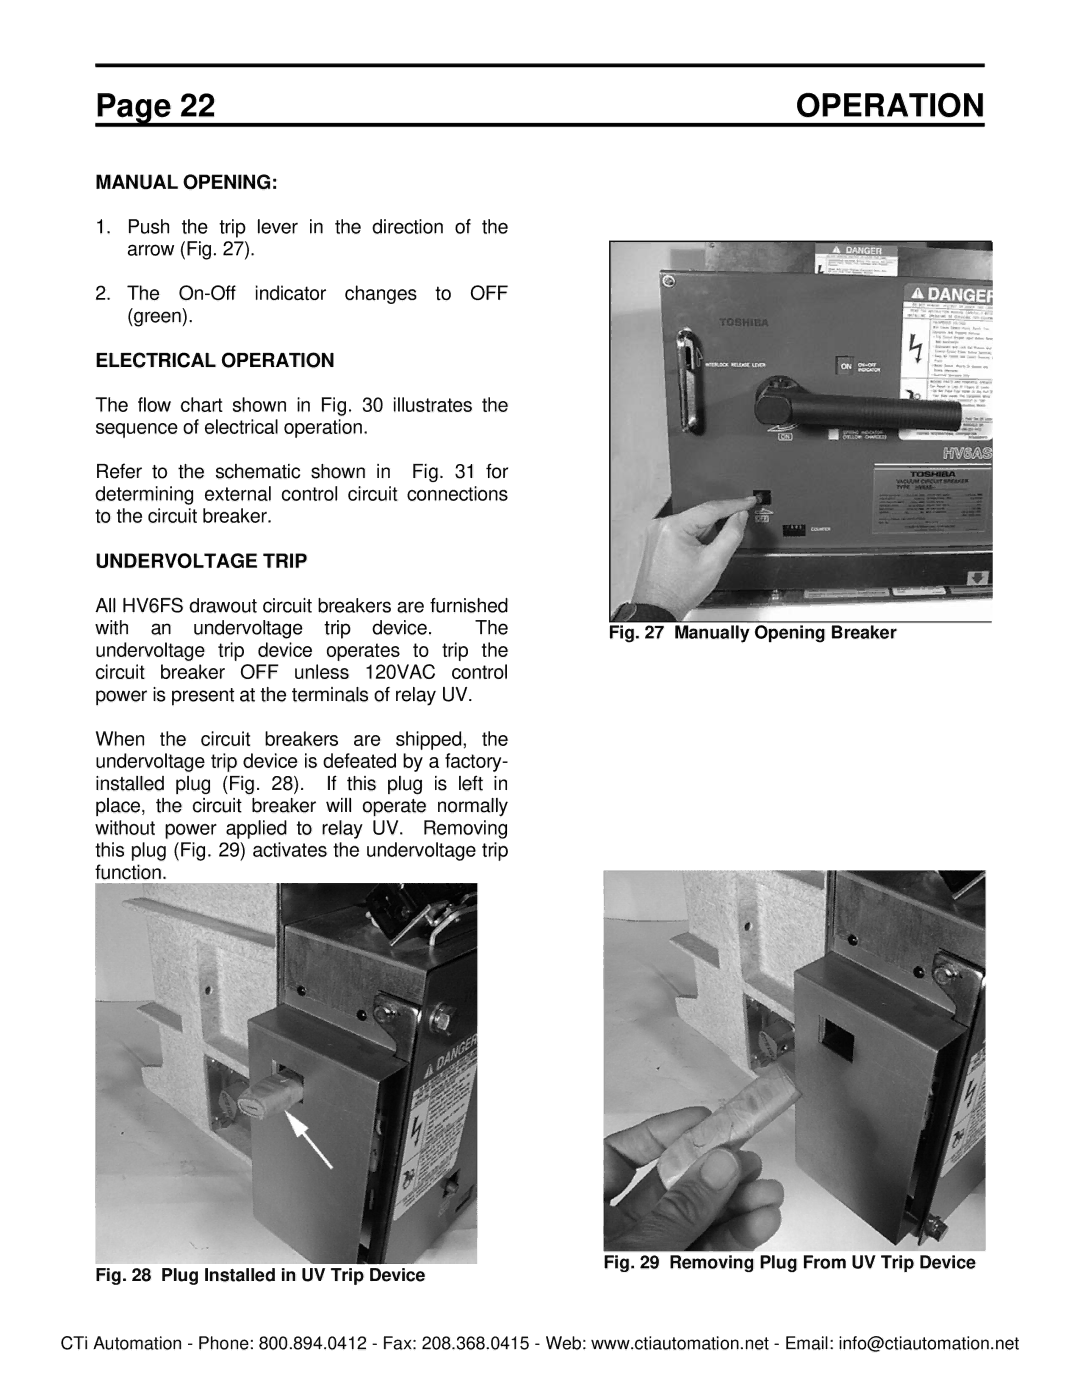 Toshiba HV6FS-MLD instruction manual Manual Opening, Electrical Operation, Undervoltage Trip 